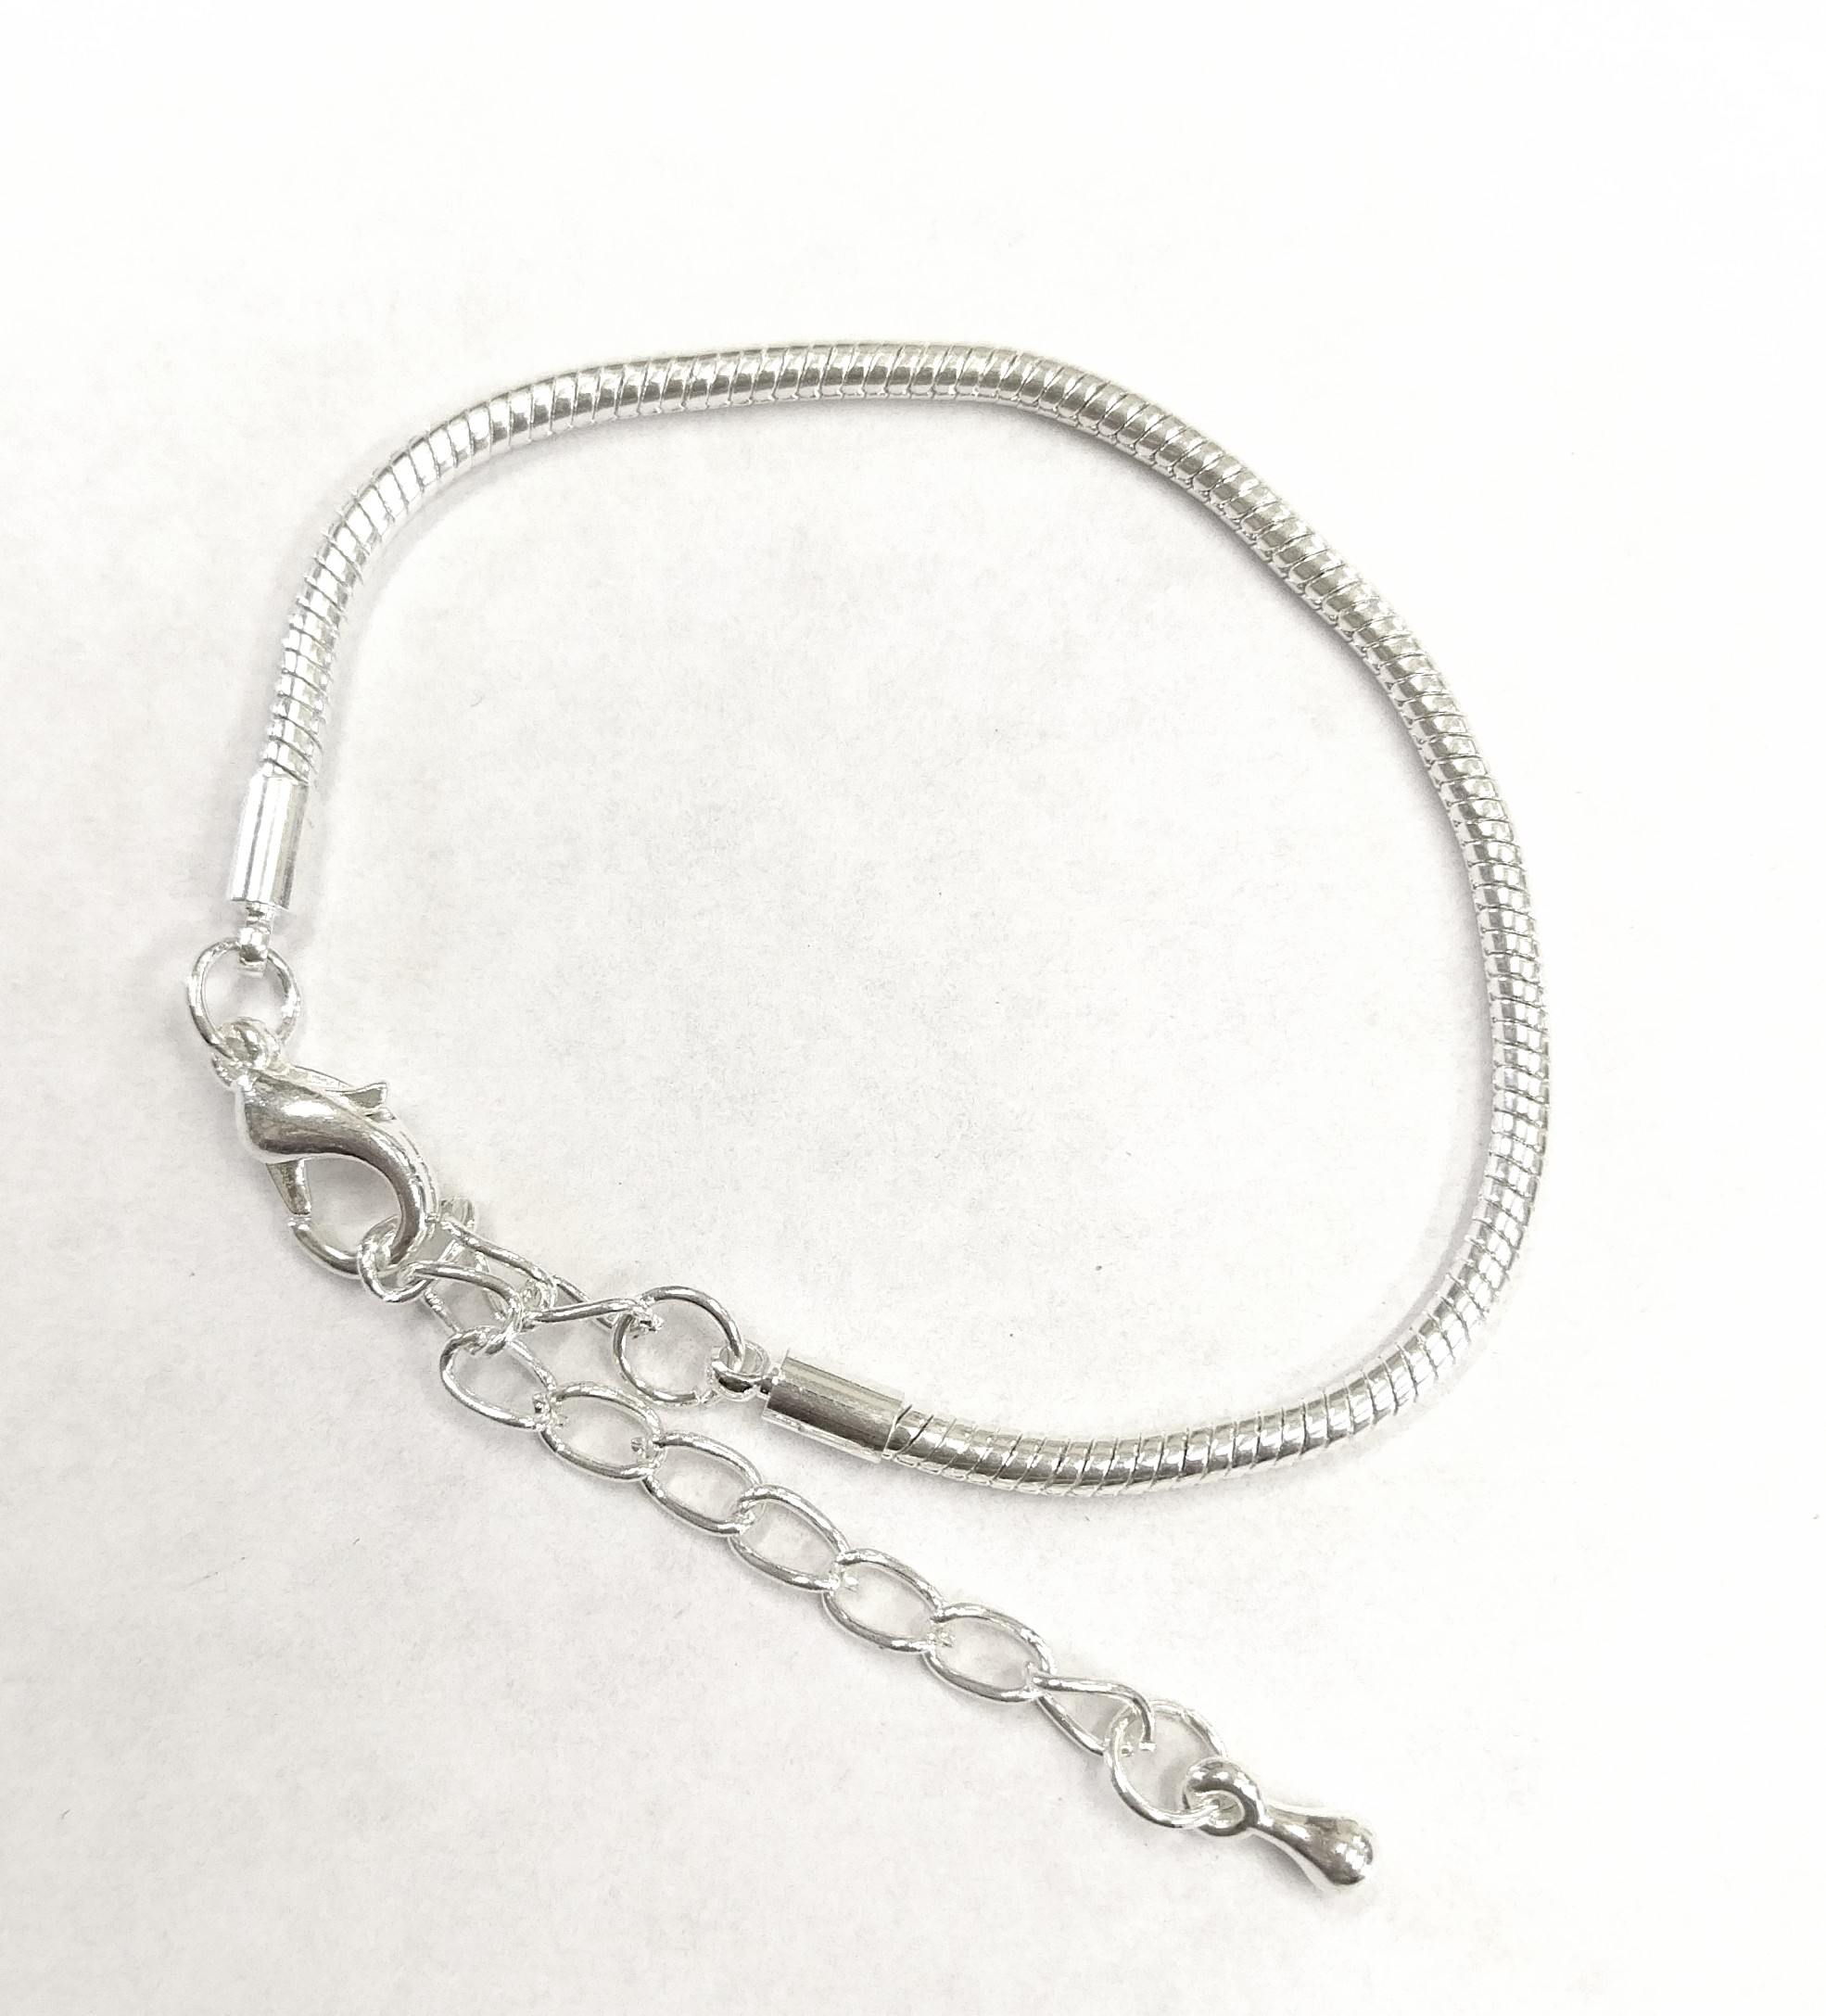 Silver Plated Pandora Style Designer Snake Chain Bracelet - 15cm ...